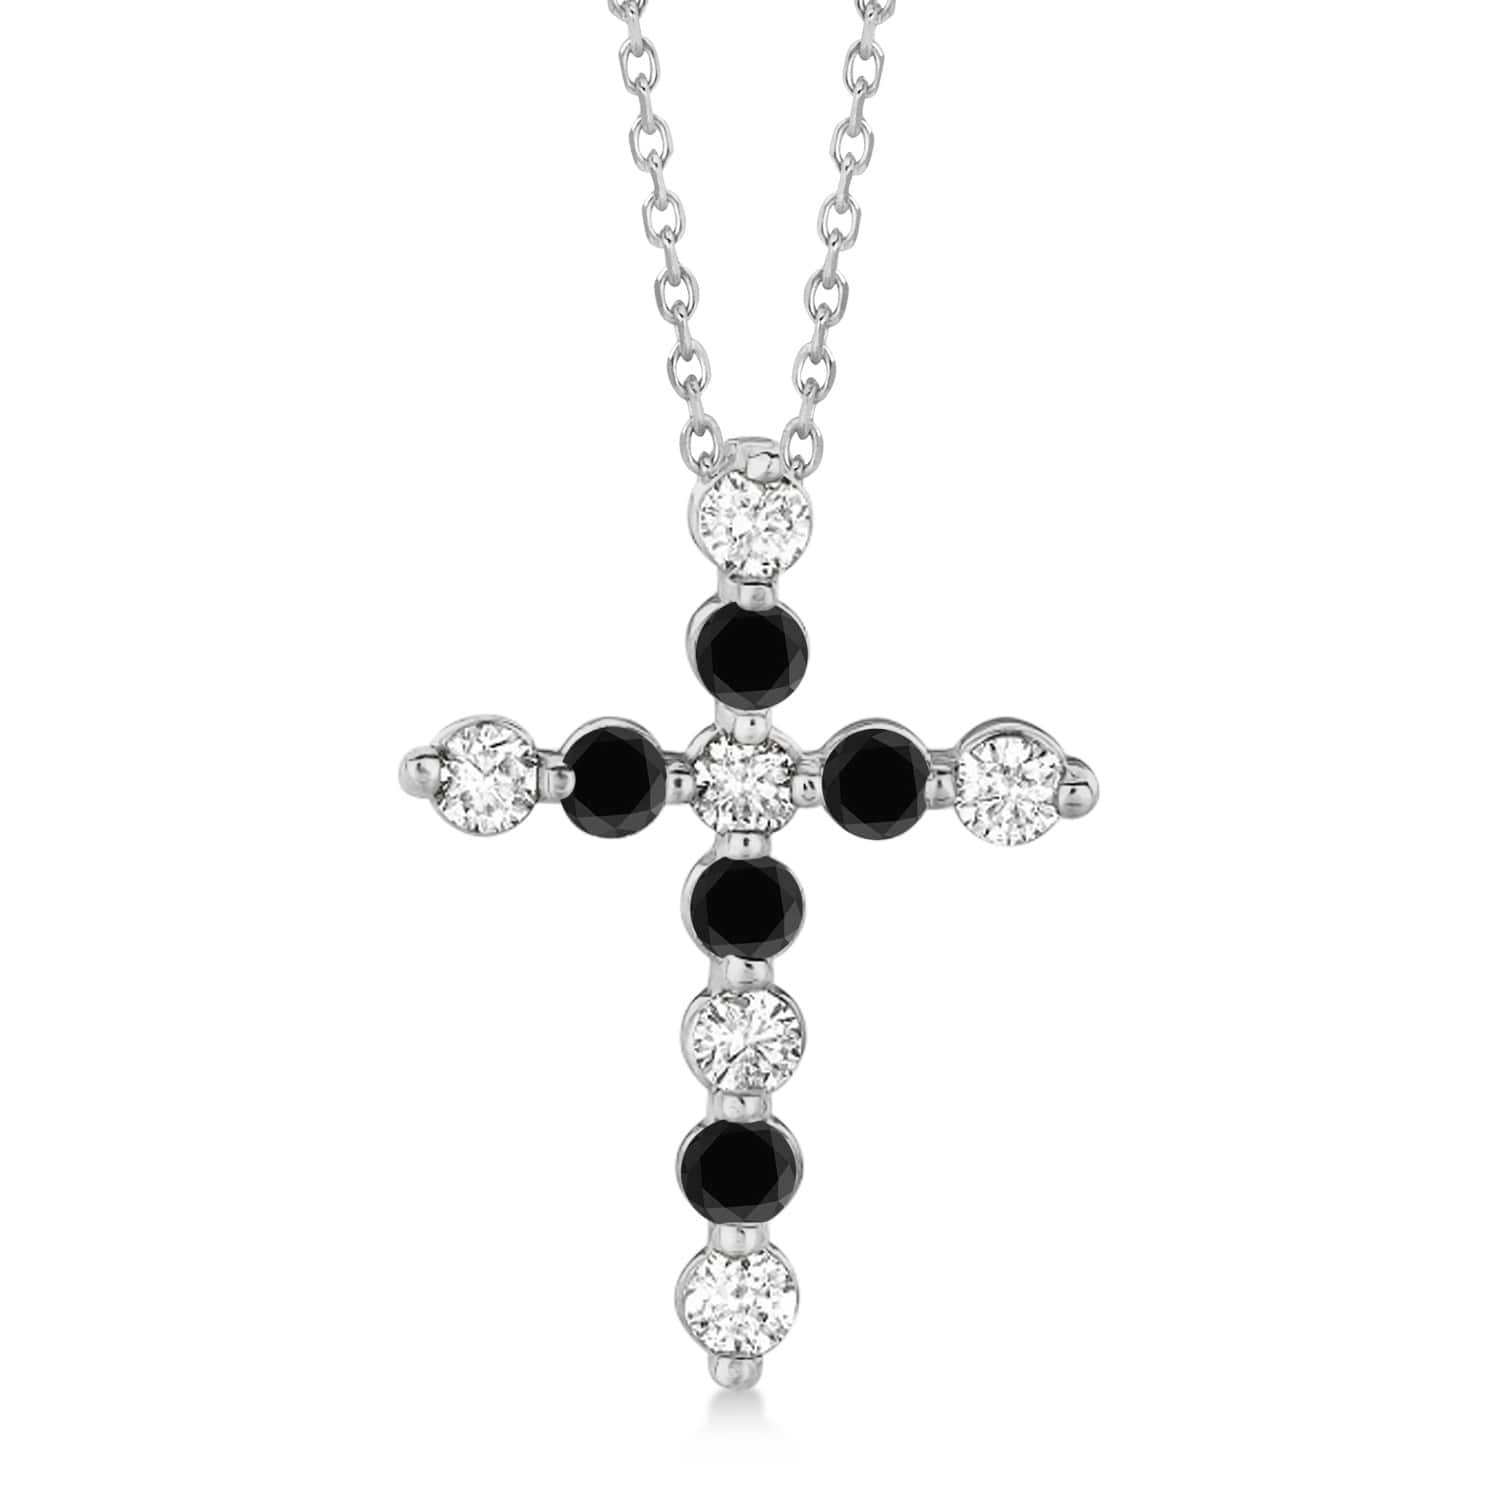 Black & White Diamond Cross Pendant Necklace in 14k White Gold (1.01ct)